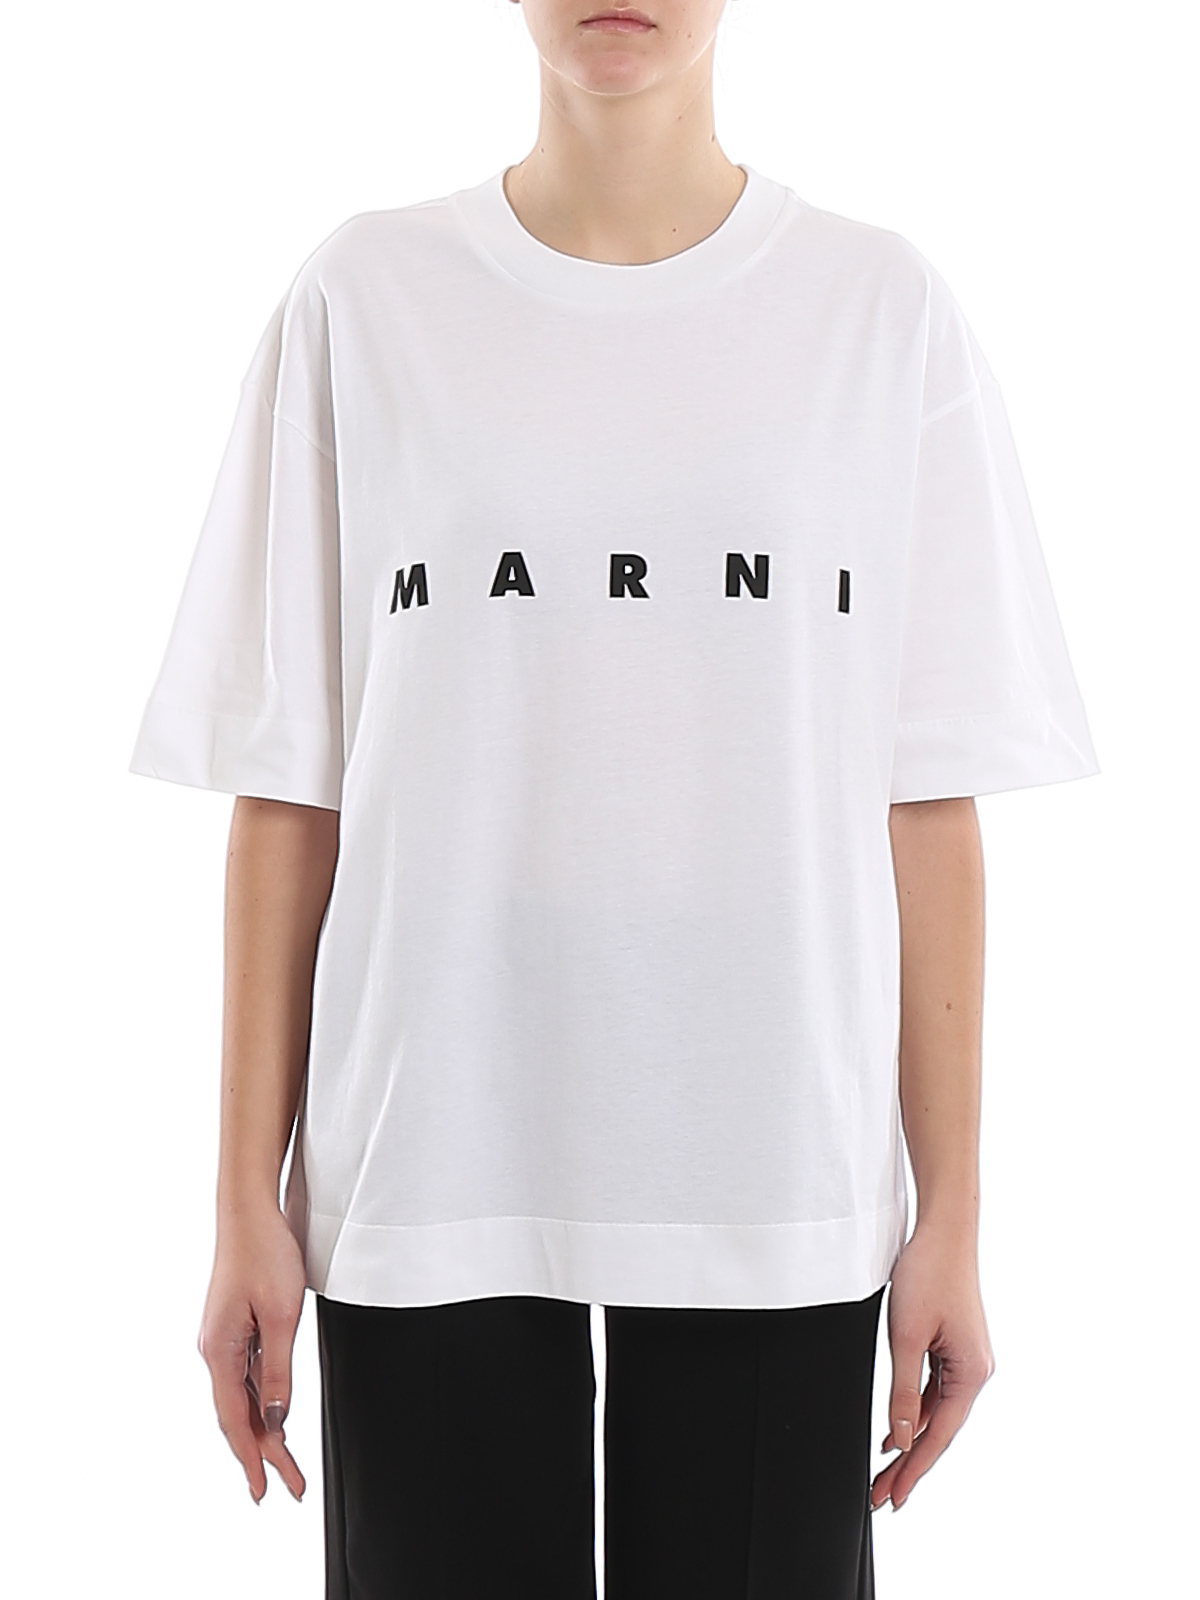 Tシャツ Marni - Tシャツ - 白 - THJET49EPBSCP89LOW01 | THEBS [iKRIX]